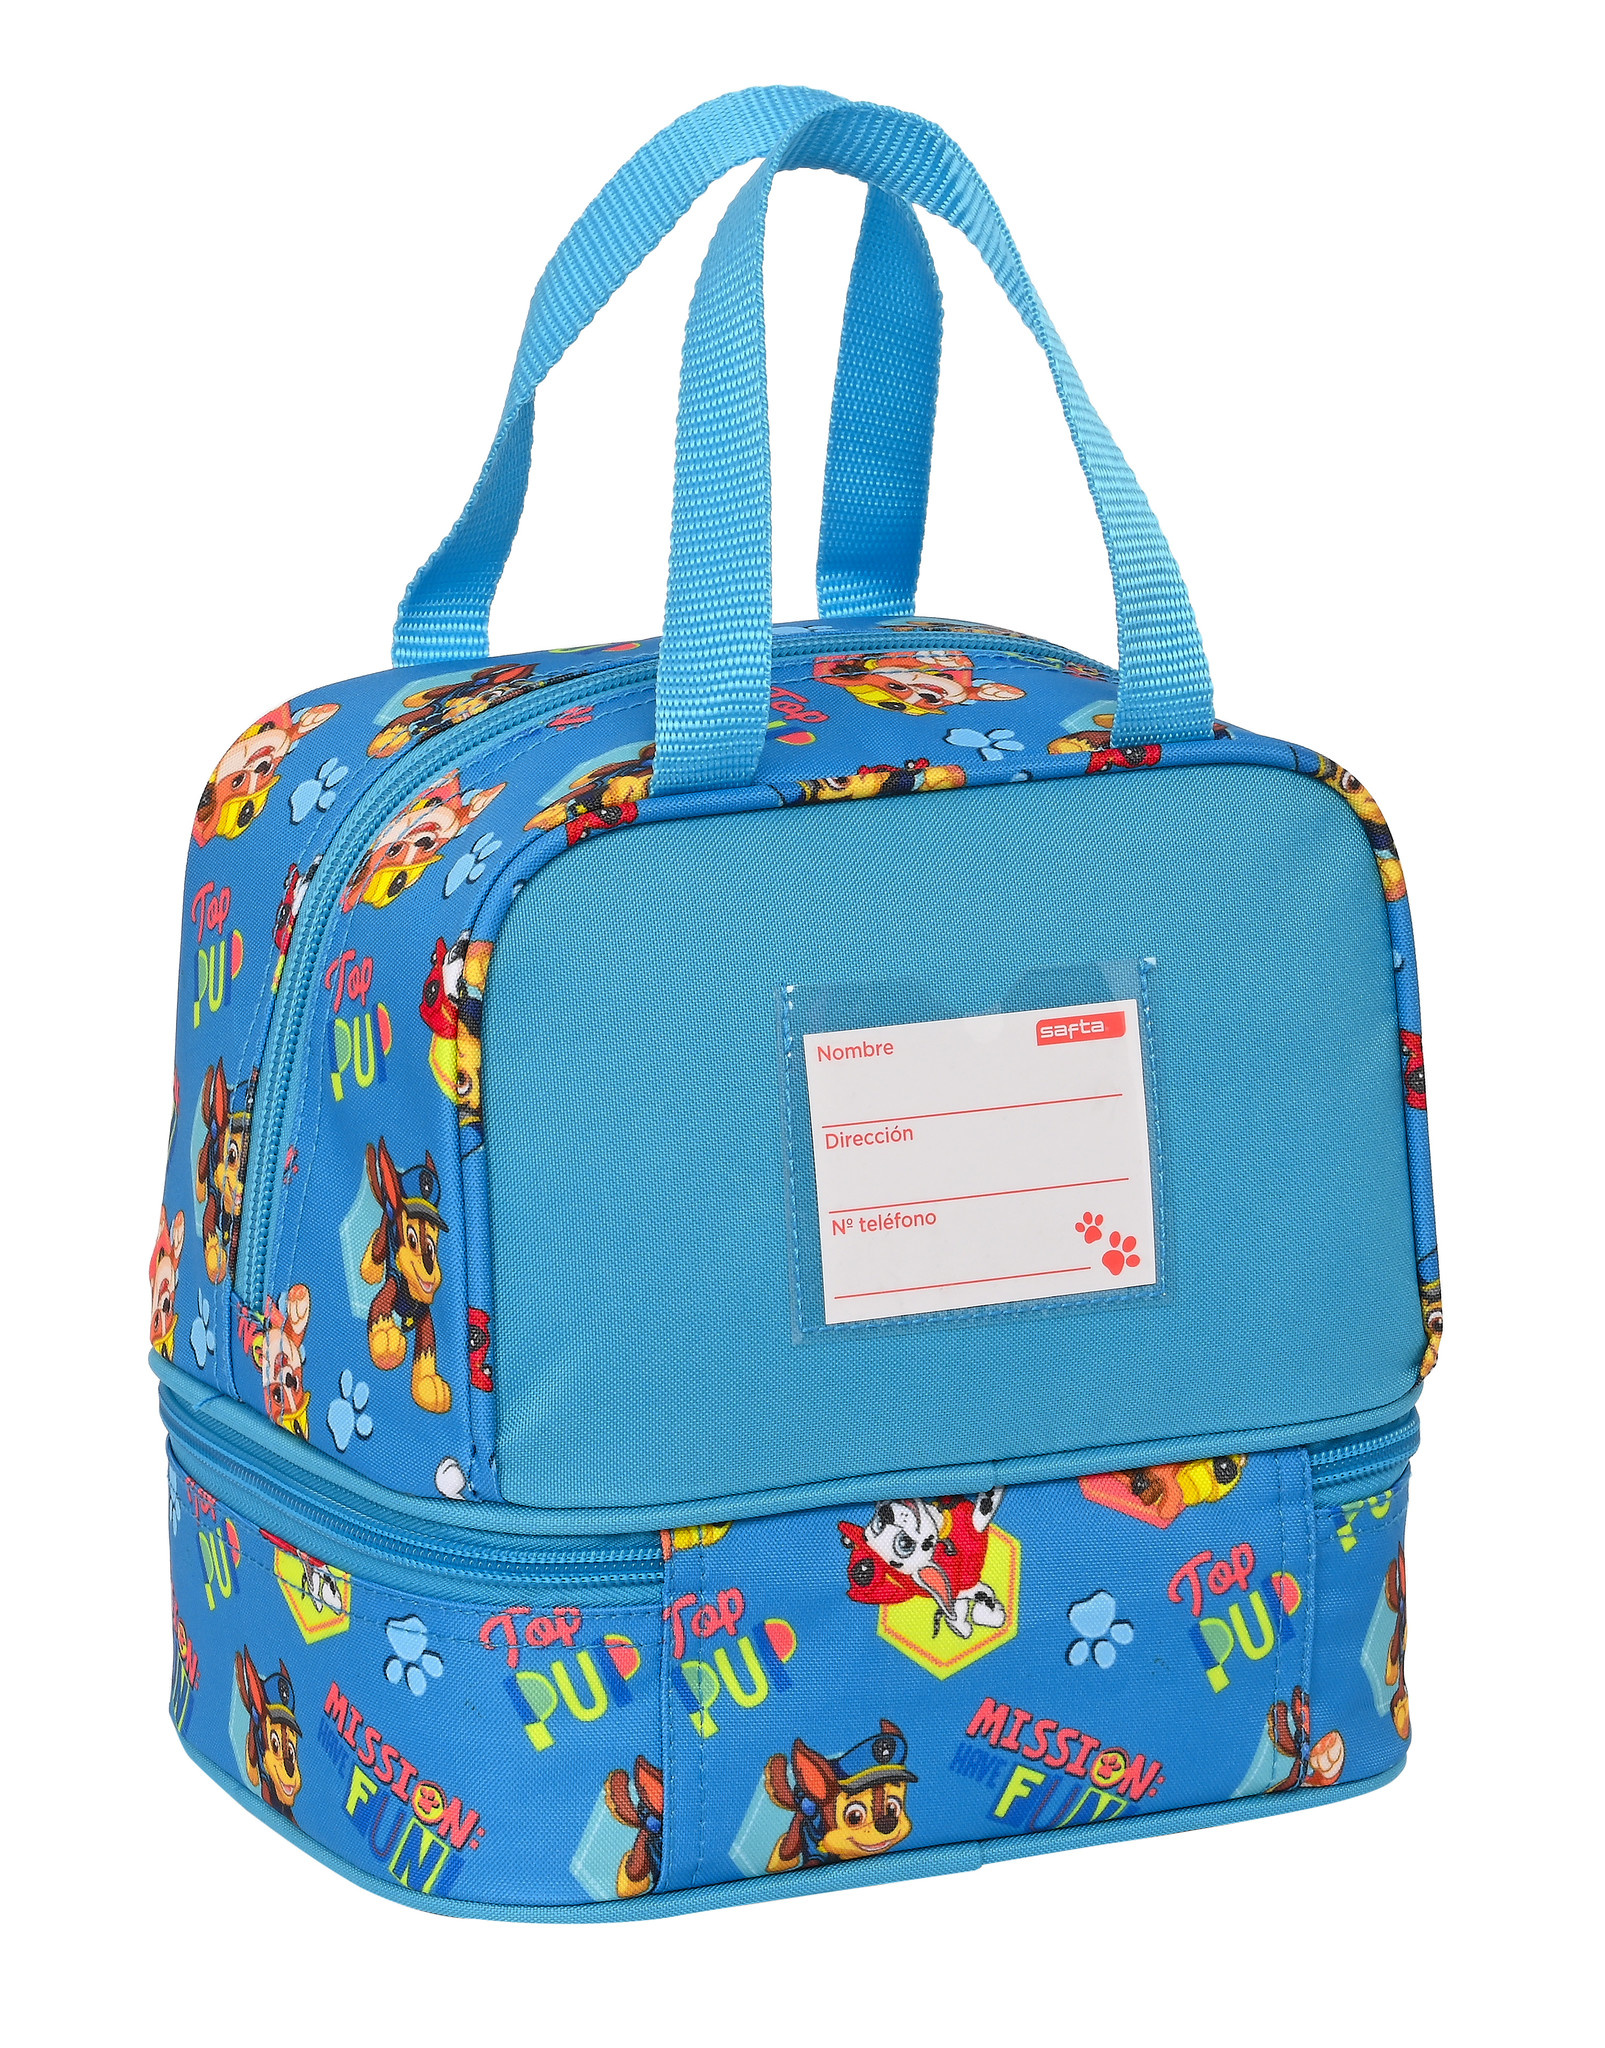 Paw Patrol Cool bag Friendship - 20 x 20 x 10 cm - Polyester